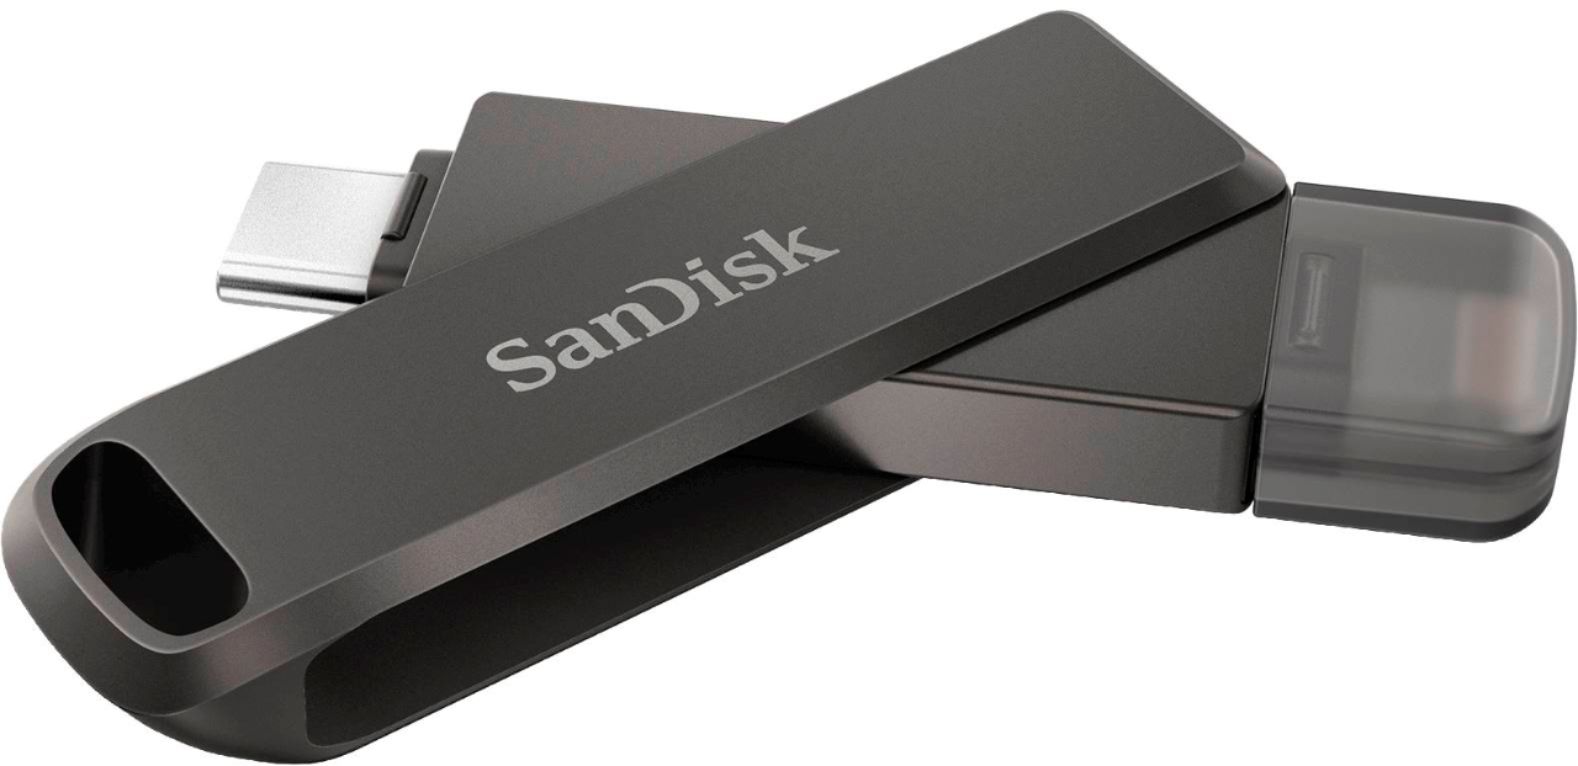 SANDISK Clé USB iPhone 64go iXpand Flash Drive lightning + USB pas